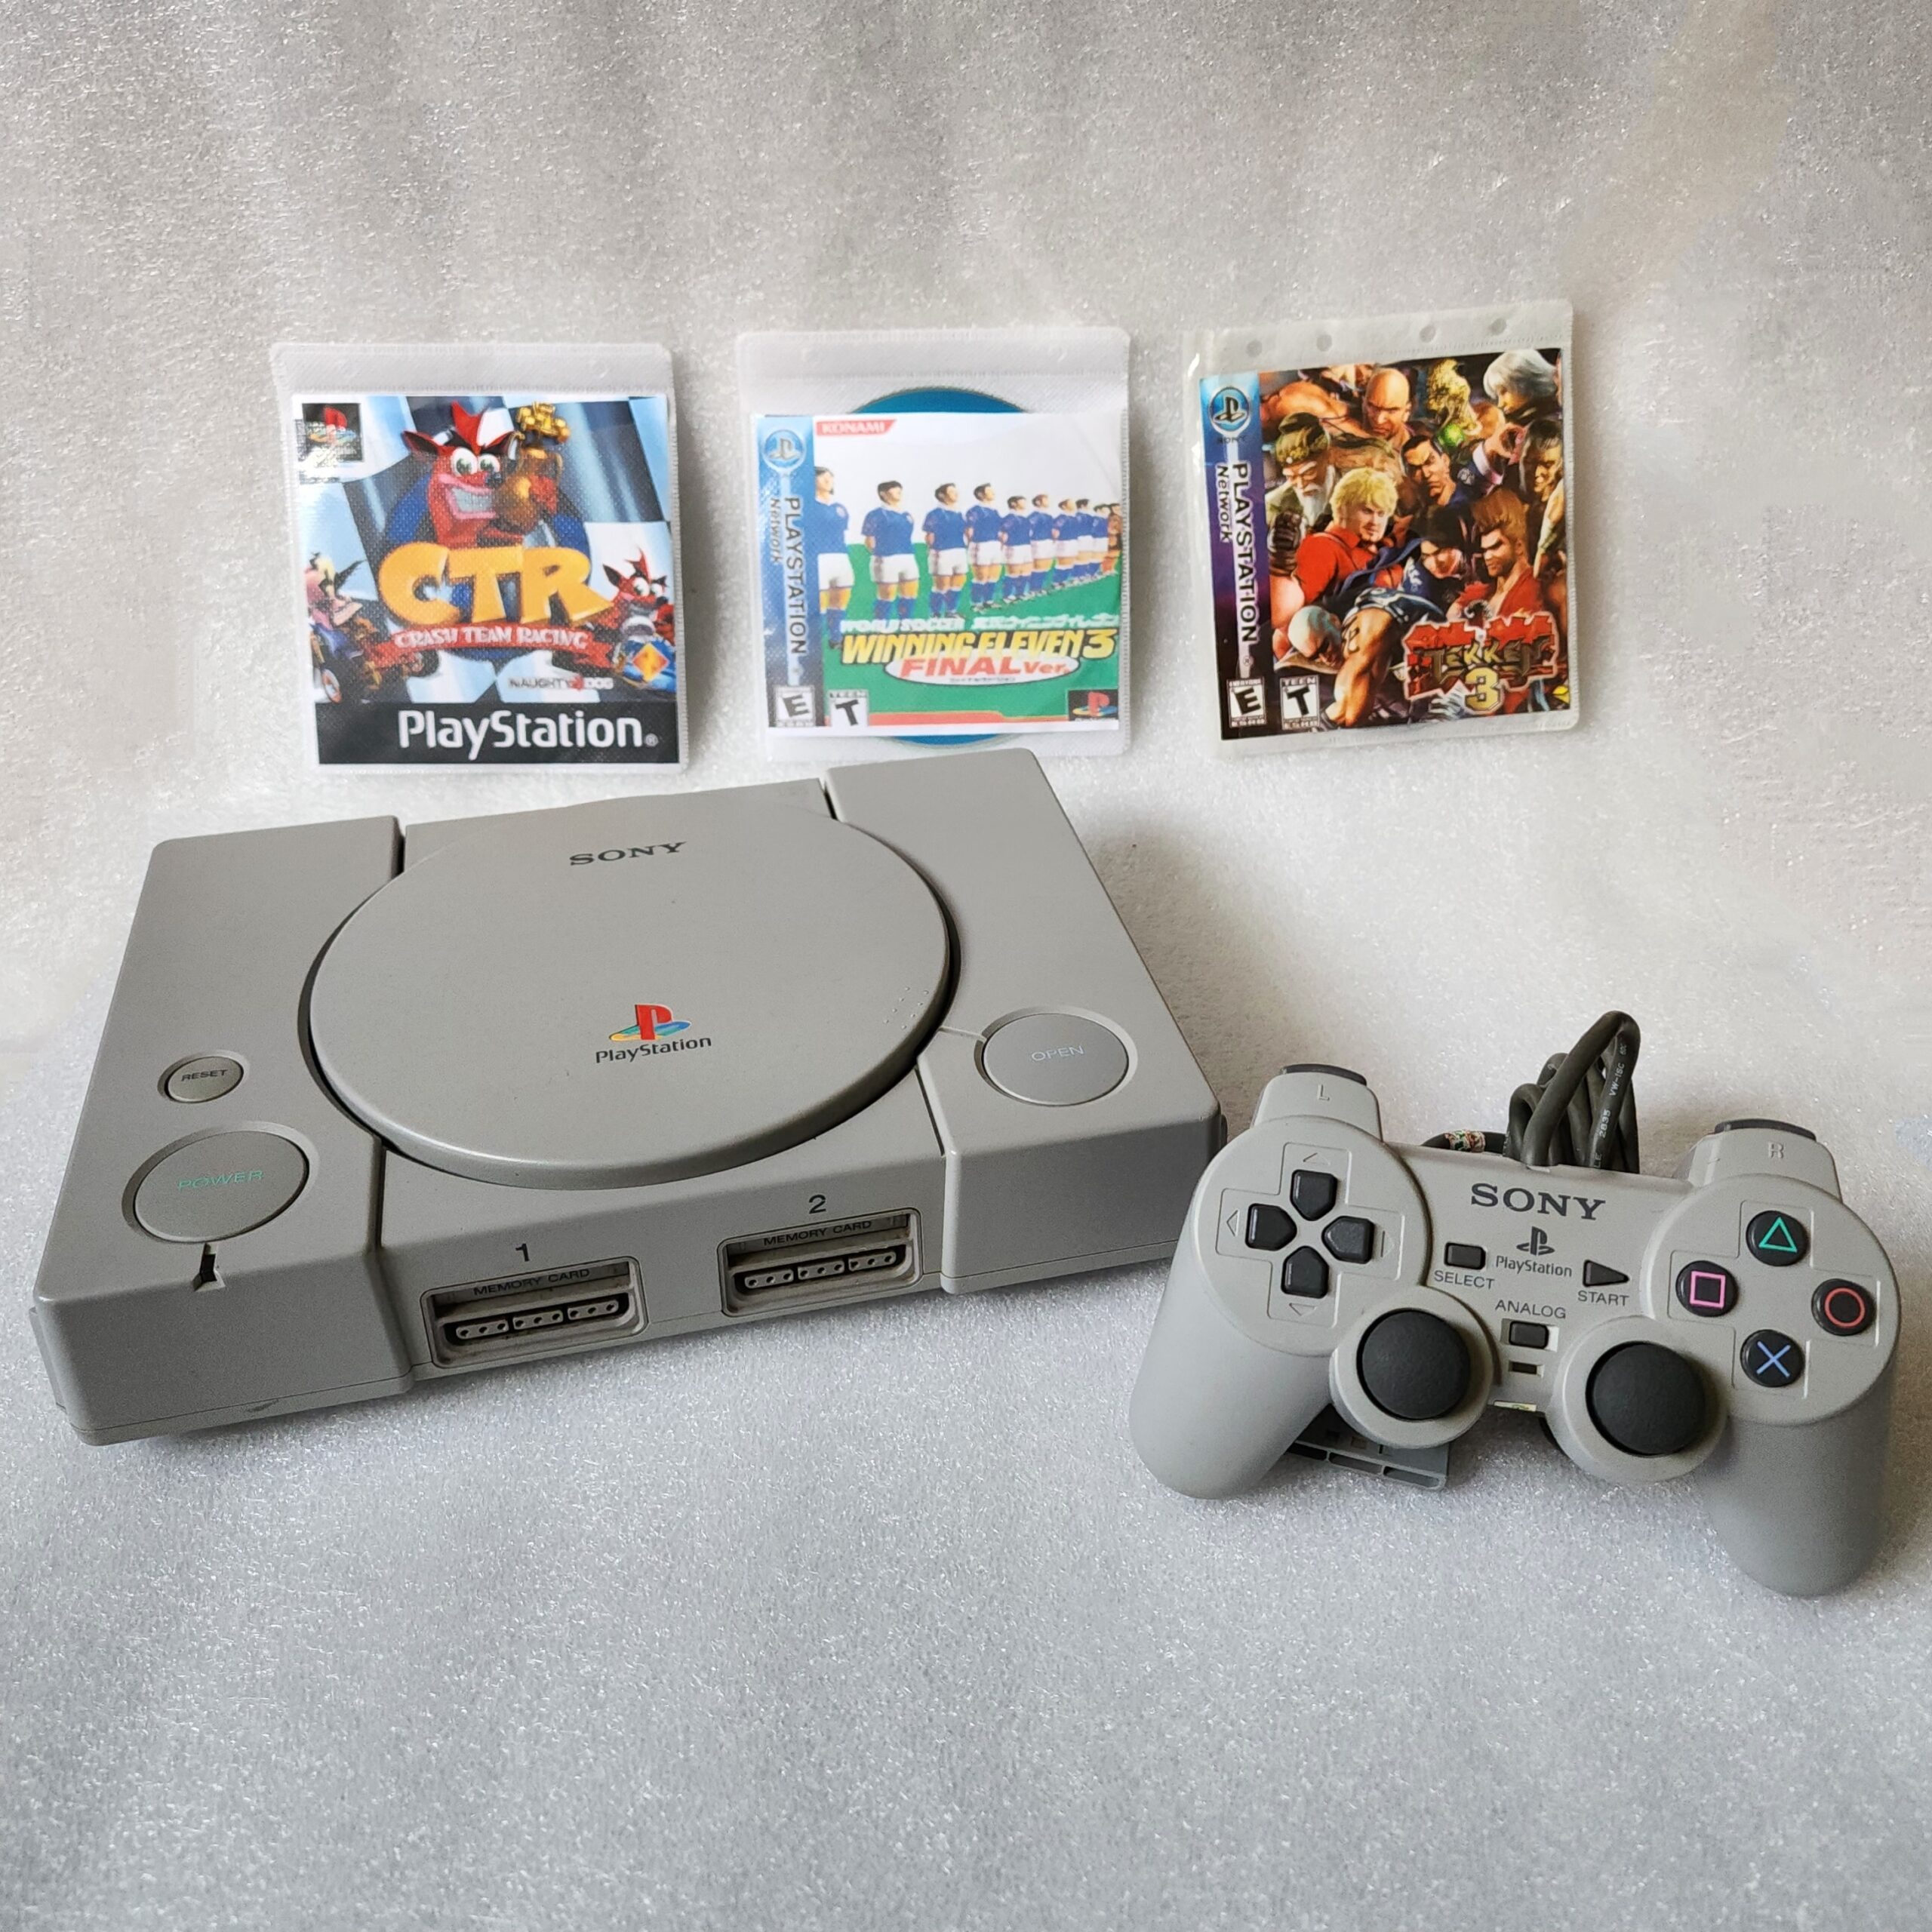 Consola Playstation Clásica PlayStation PS1